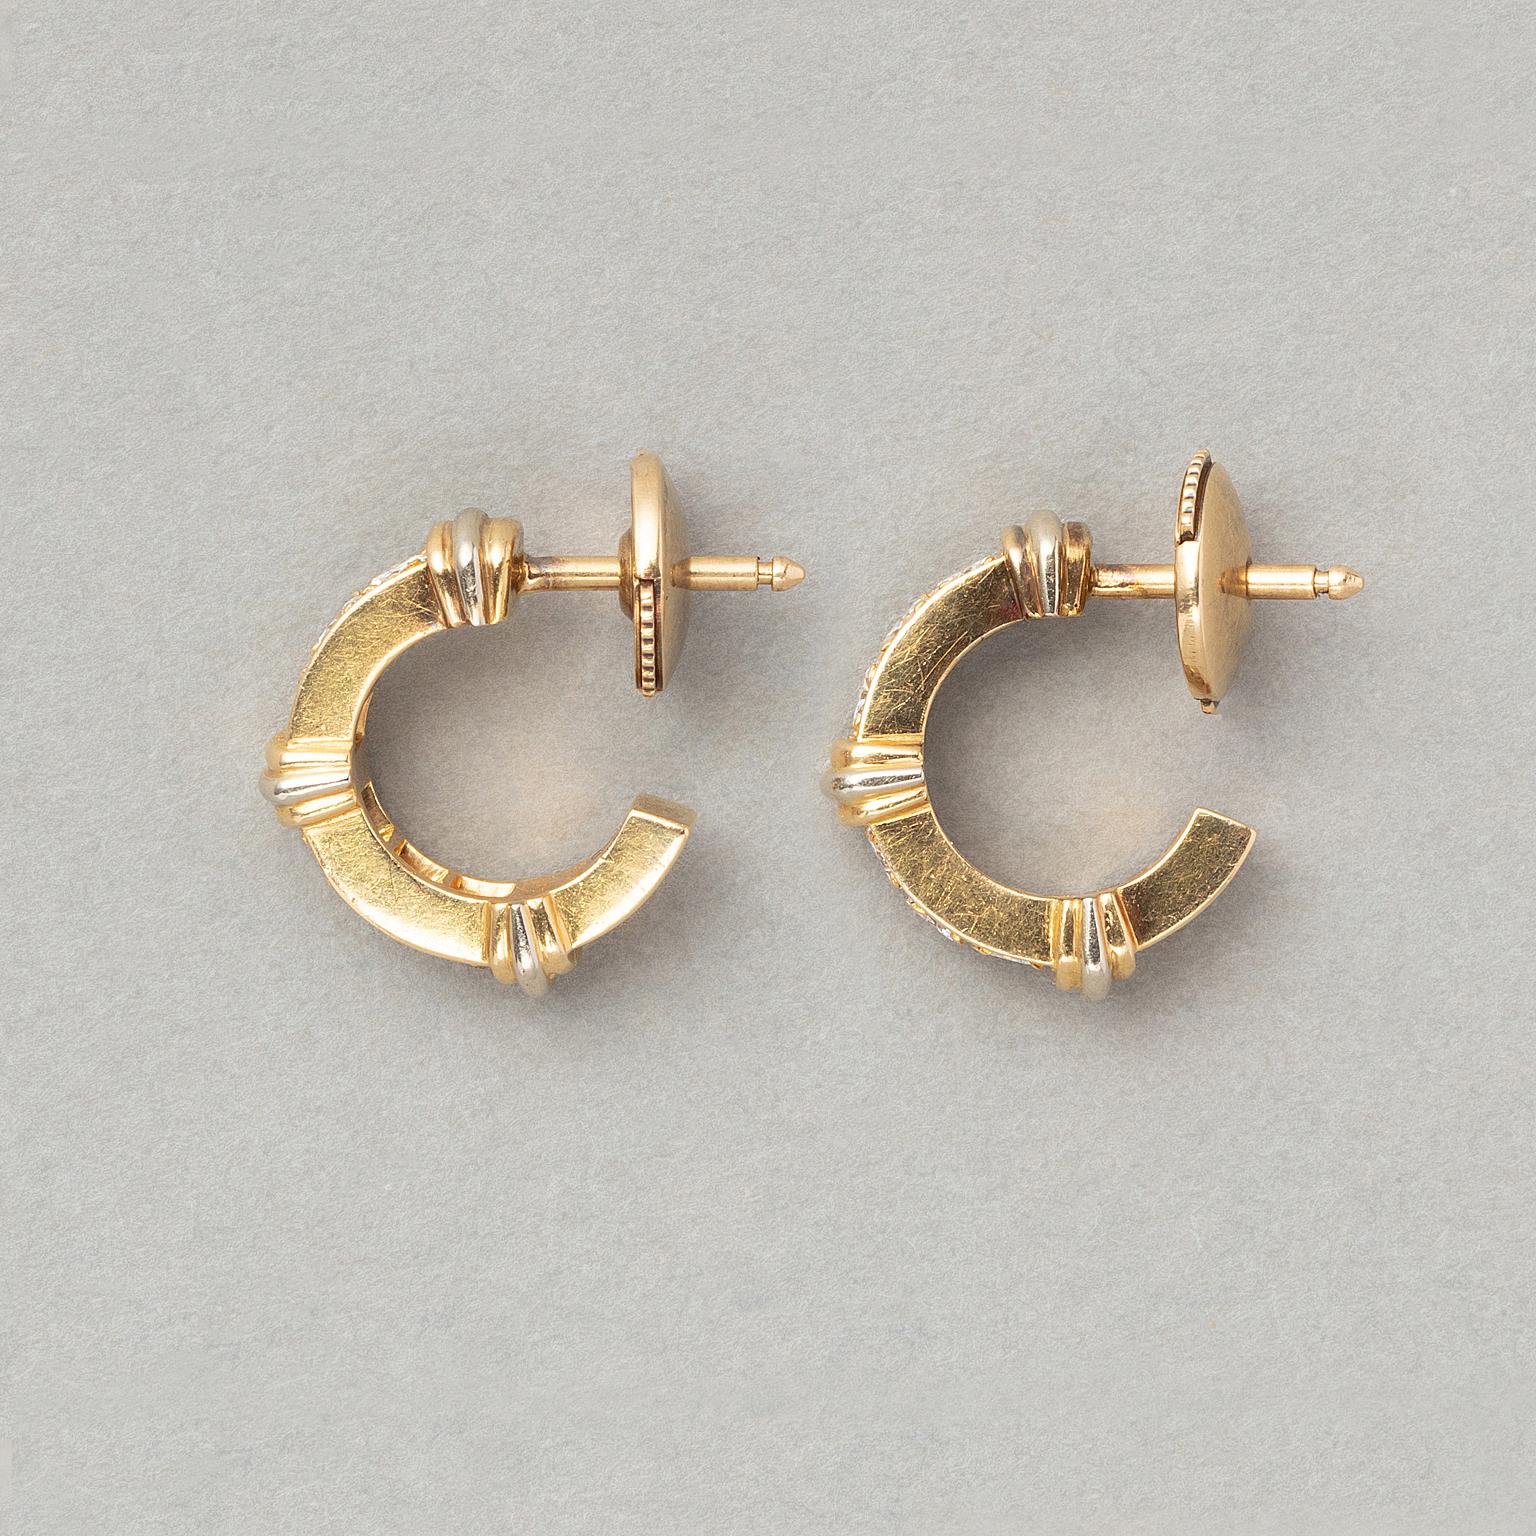 Brilliant Cut An 18 Carat Gold and Diamond Hoop Earrings